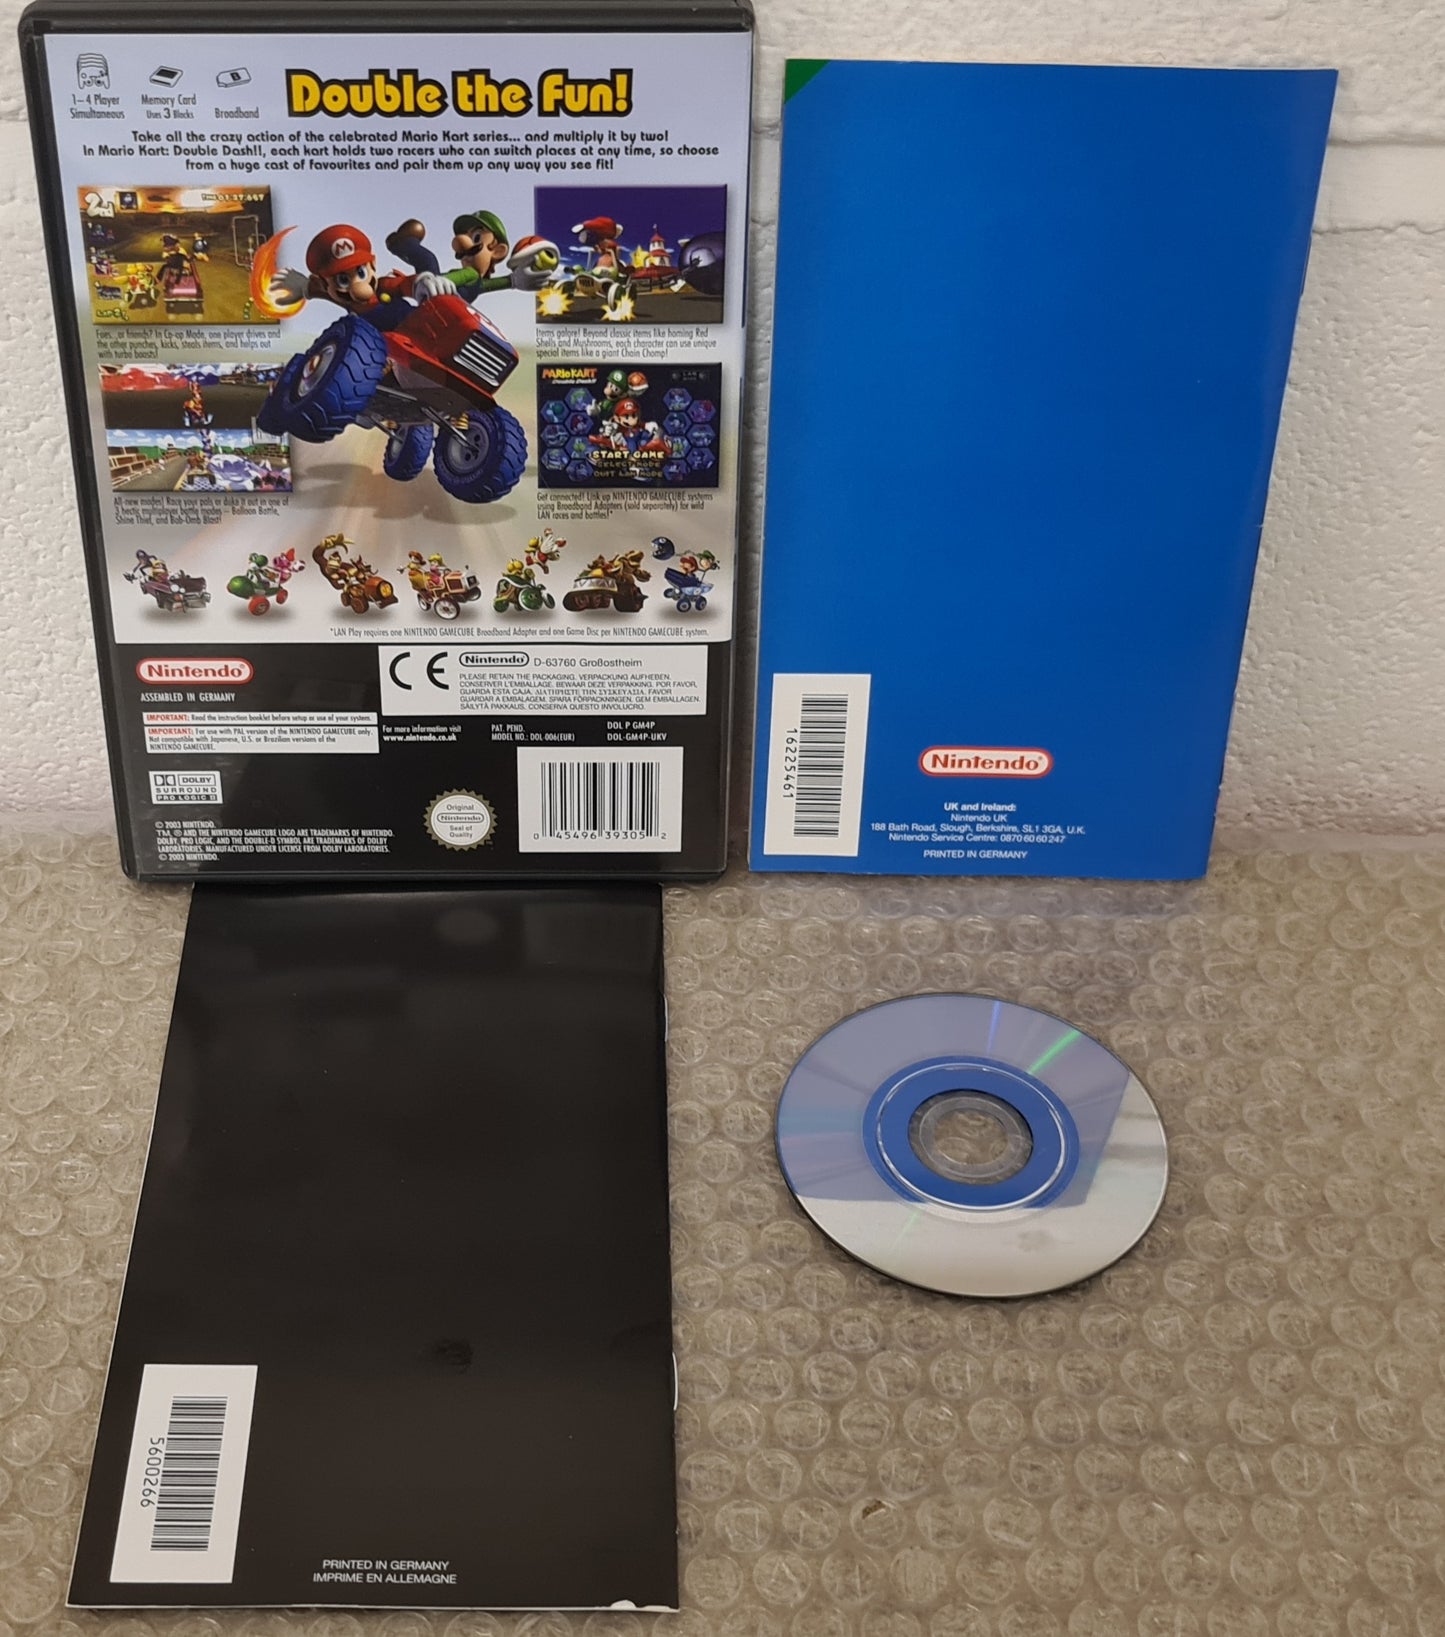 Mario Kart Double Dash Nintendo GameCube Game